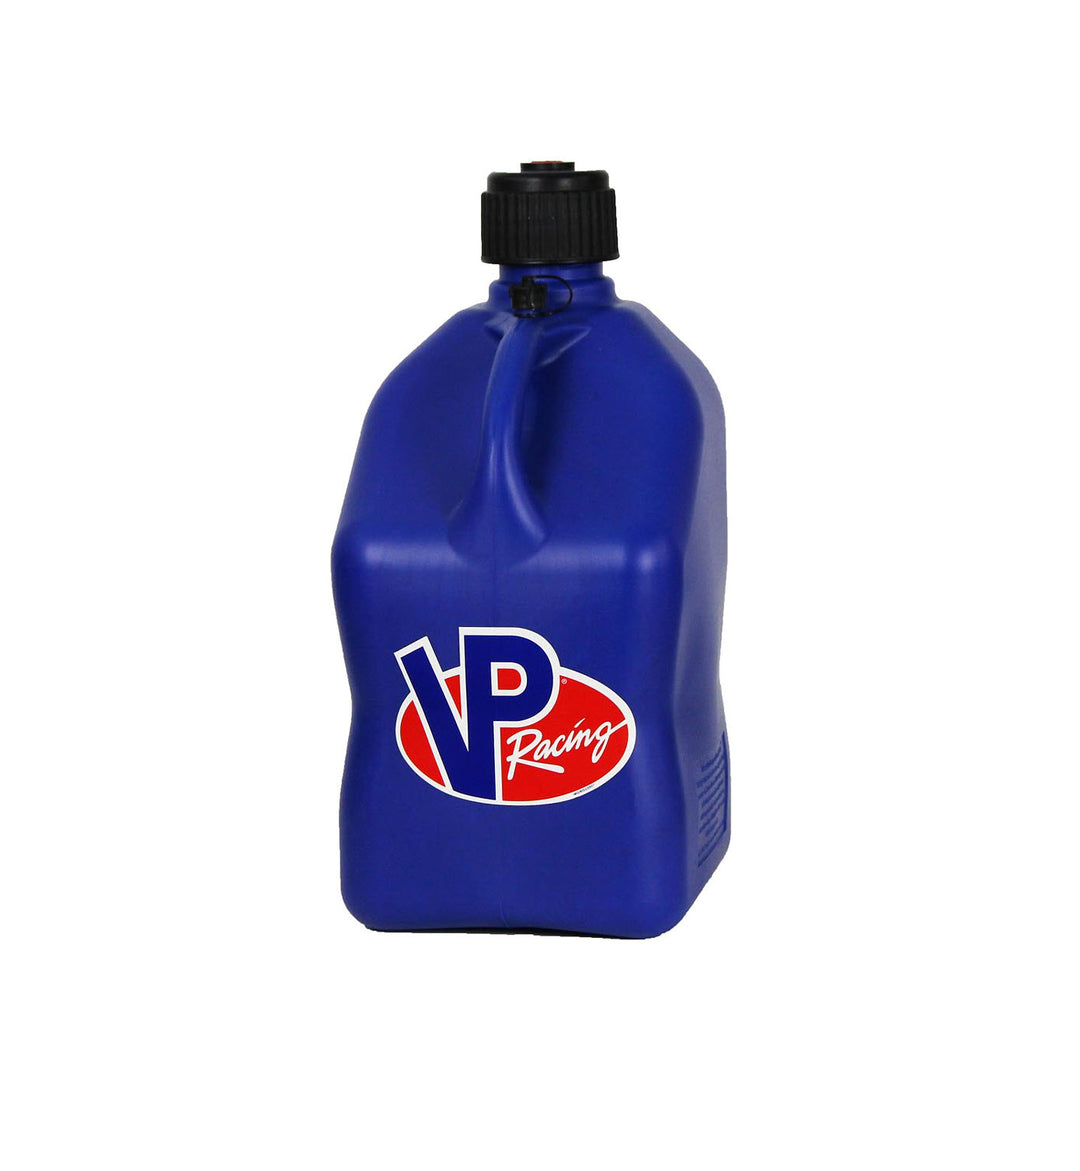 VP Racing 5.5-Gallon Motorsport Container - Blue Jug, Black Cap - Dirty Racing Products